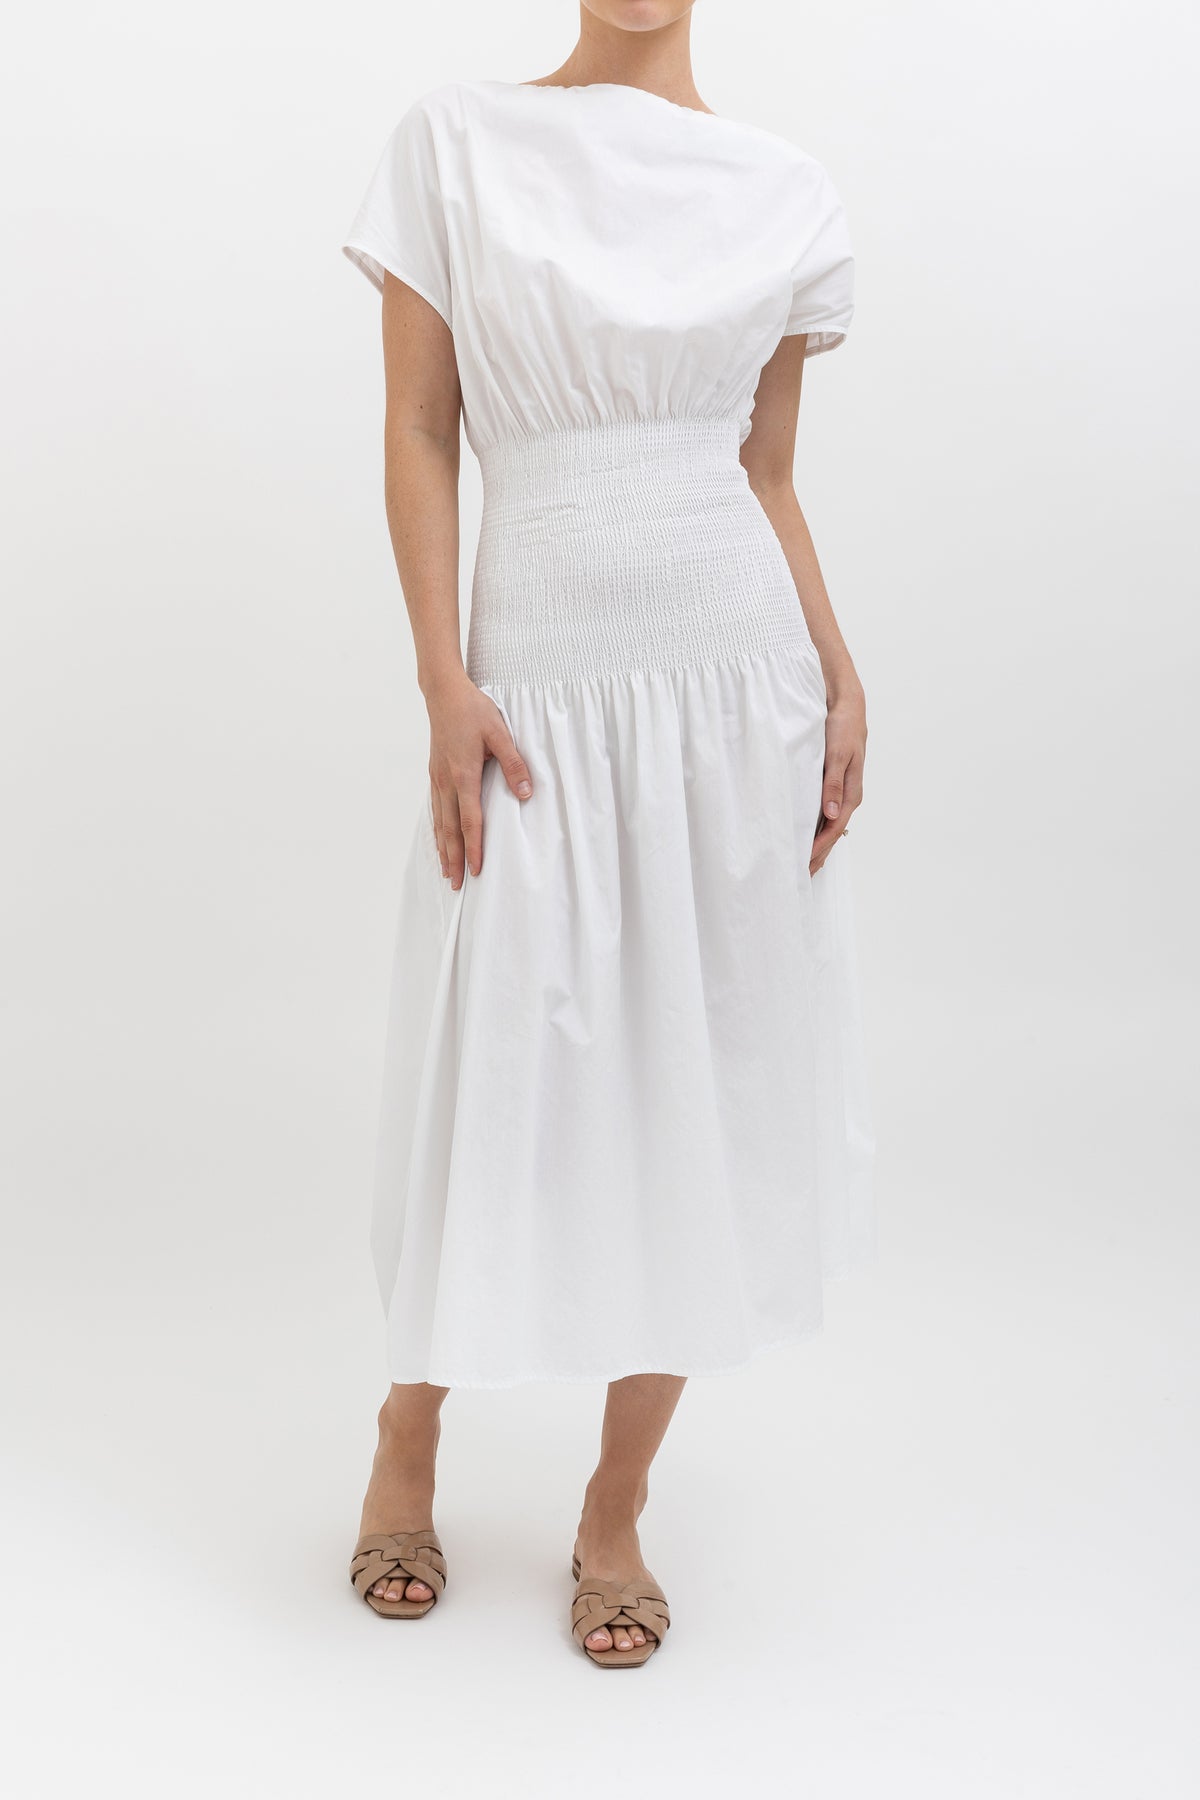 Emma-Kate Shirred Dress